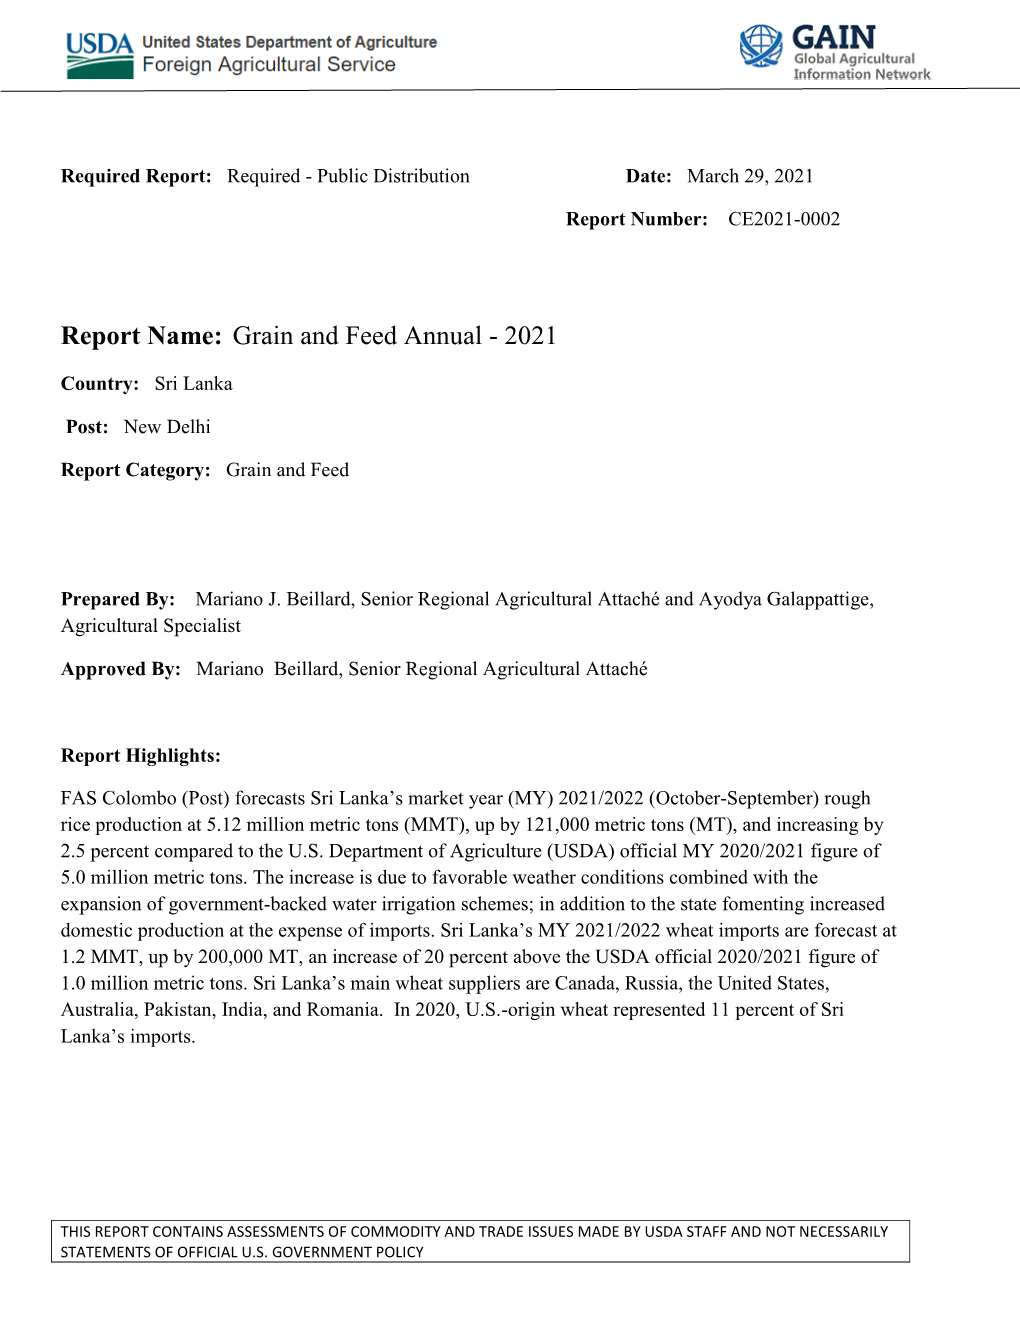 Sri Lanka Grain and Feed Annual – 2021